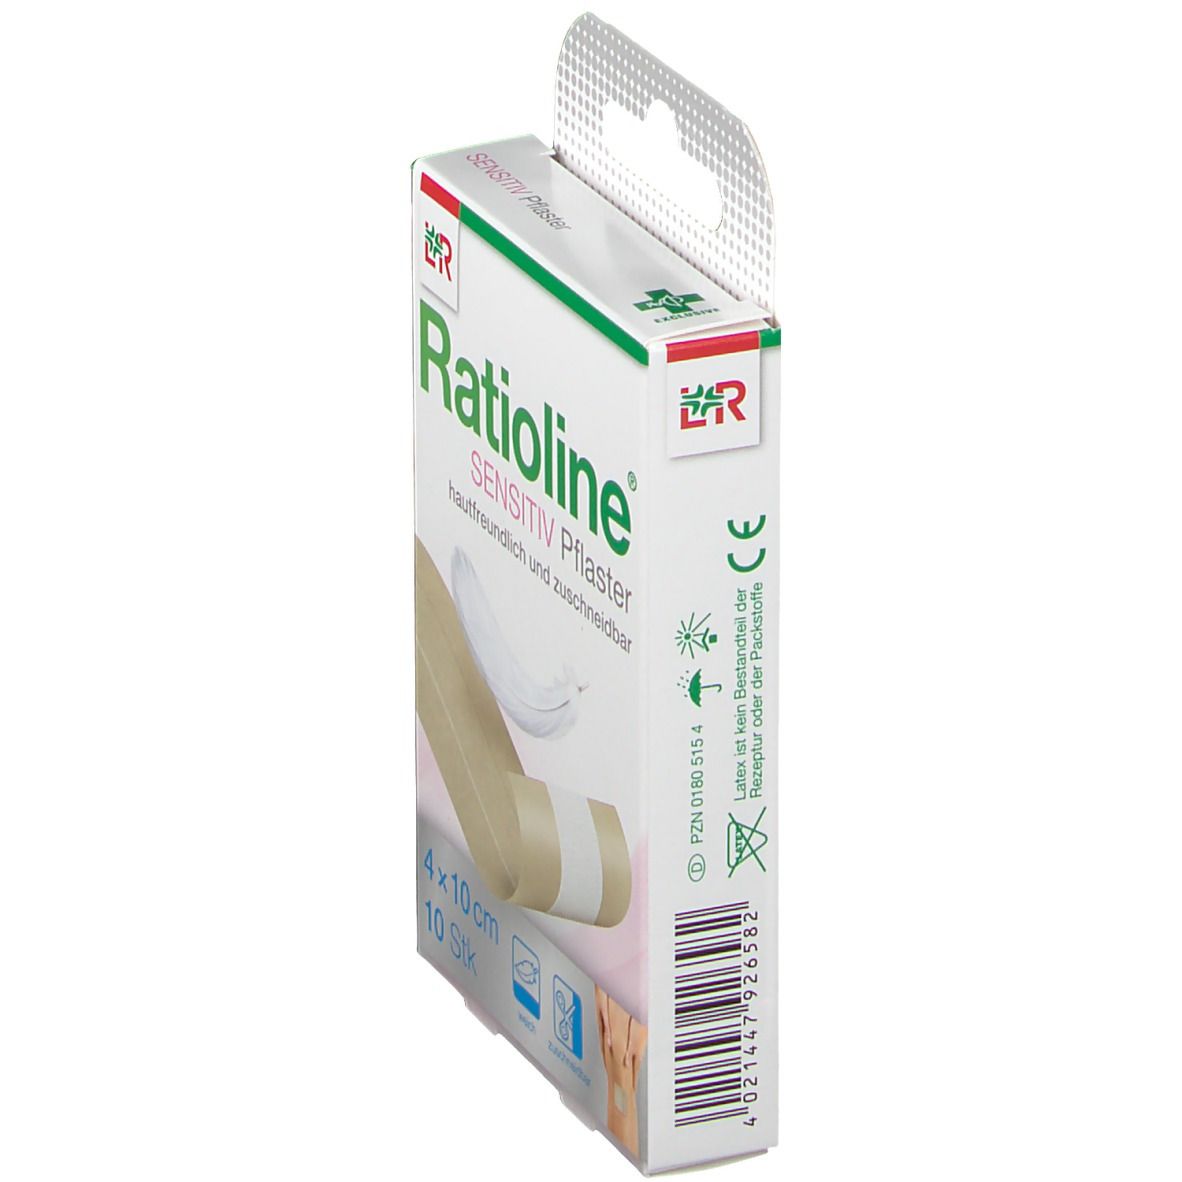 Ratioline® sensitive Wundschnellverband 4 cm x 10 cm